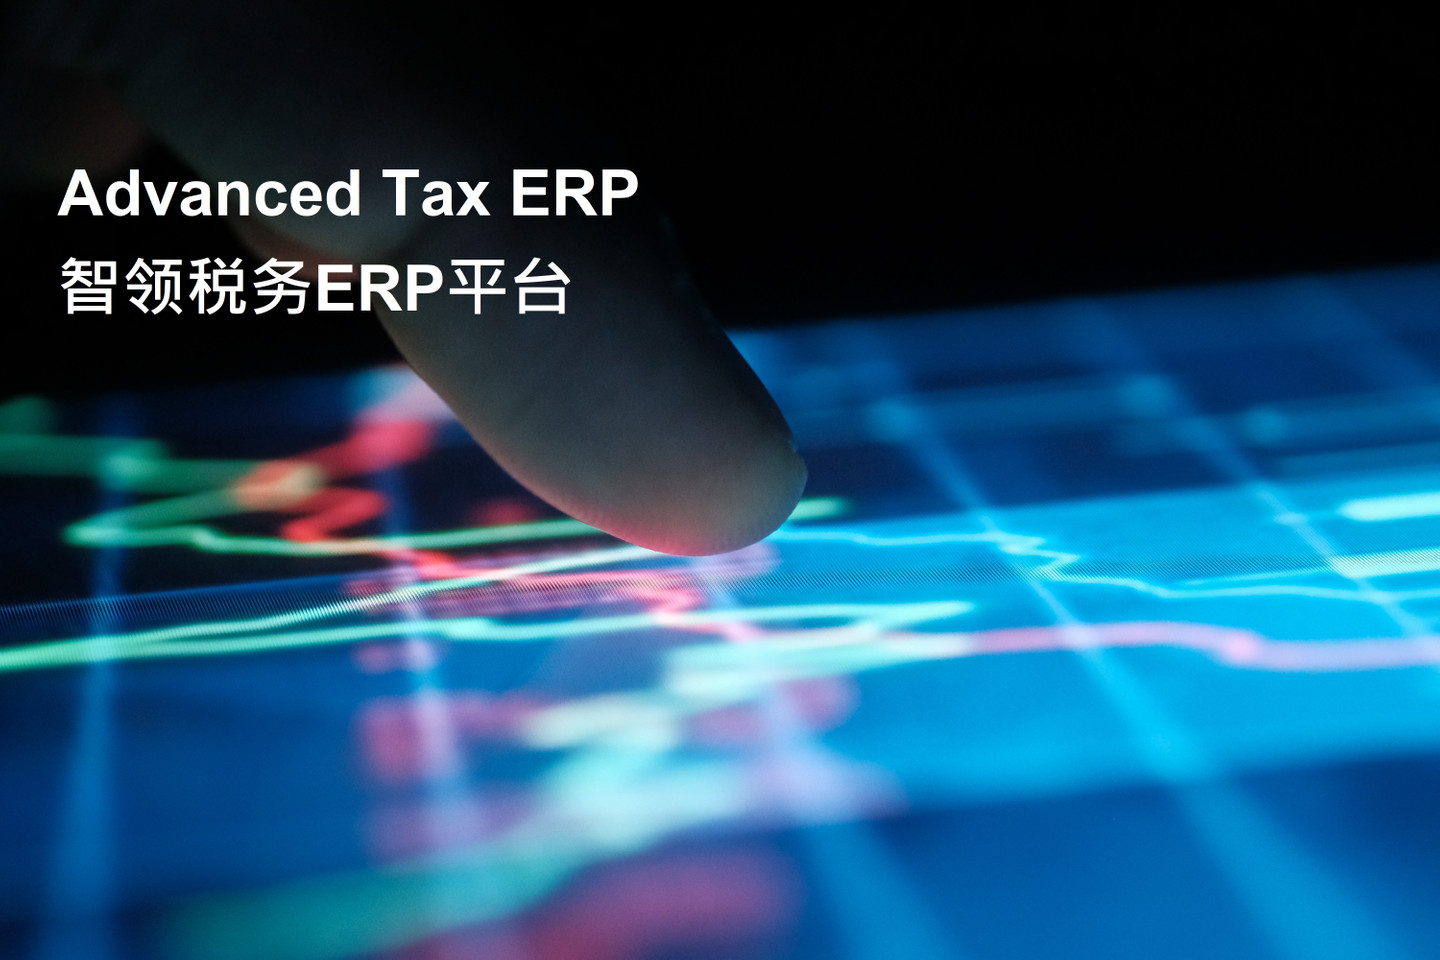 How Advanced Tax ERP works